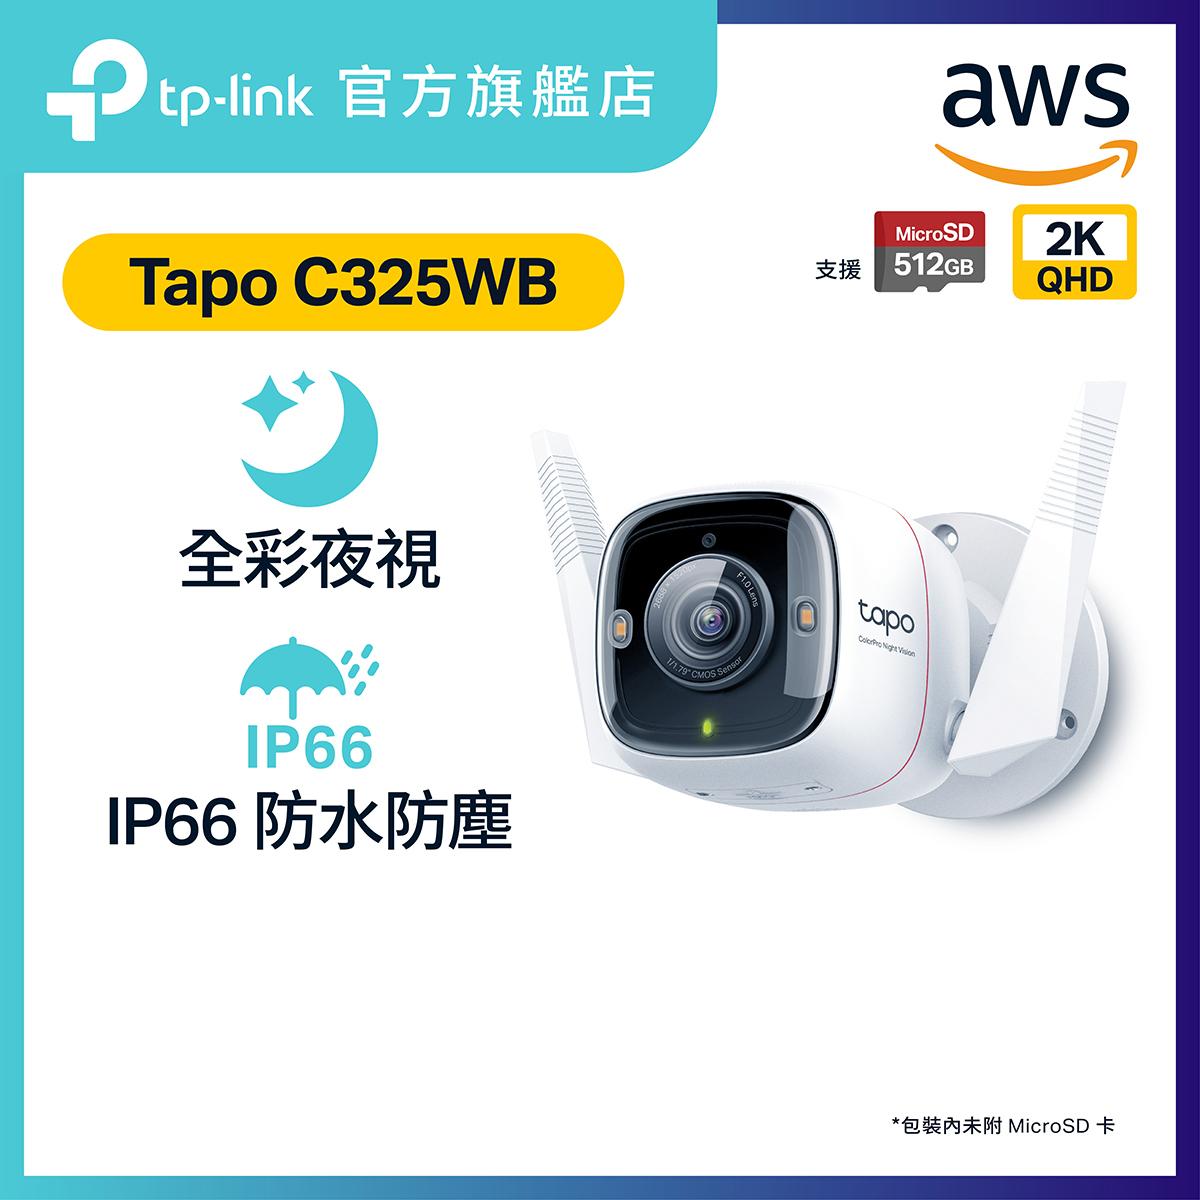 Tapo C325WB 2K QHD ColorPro 夜視防水攝影機 / IP Cam